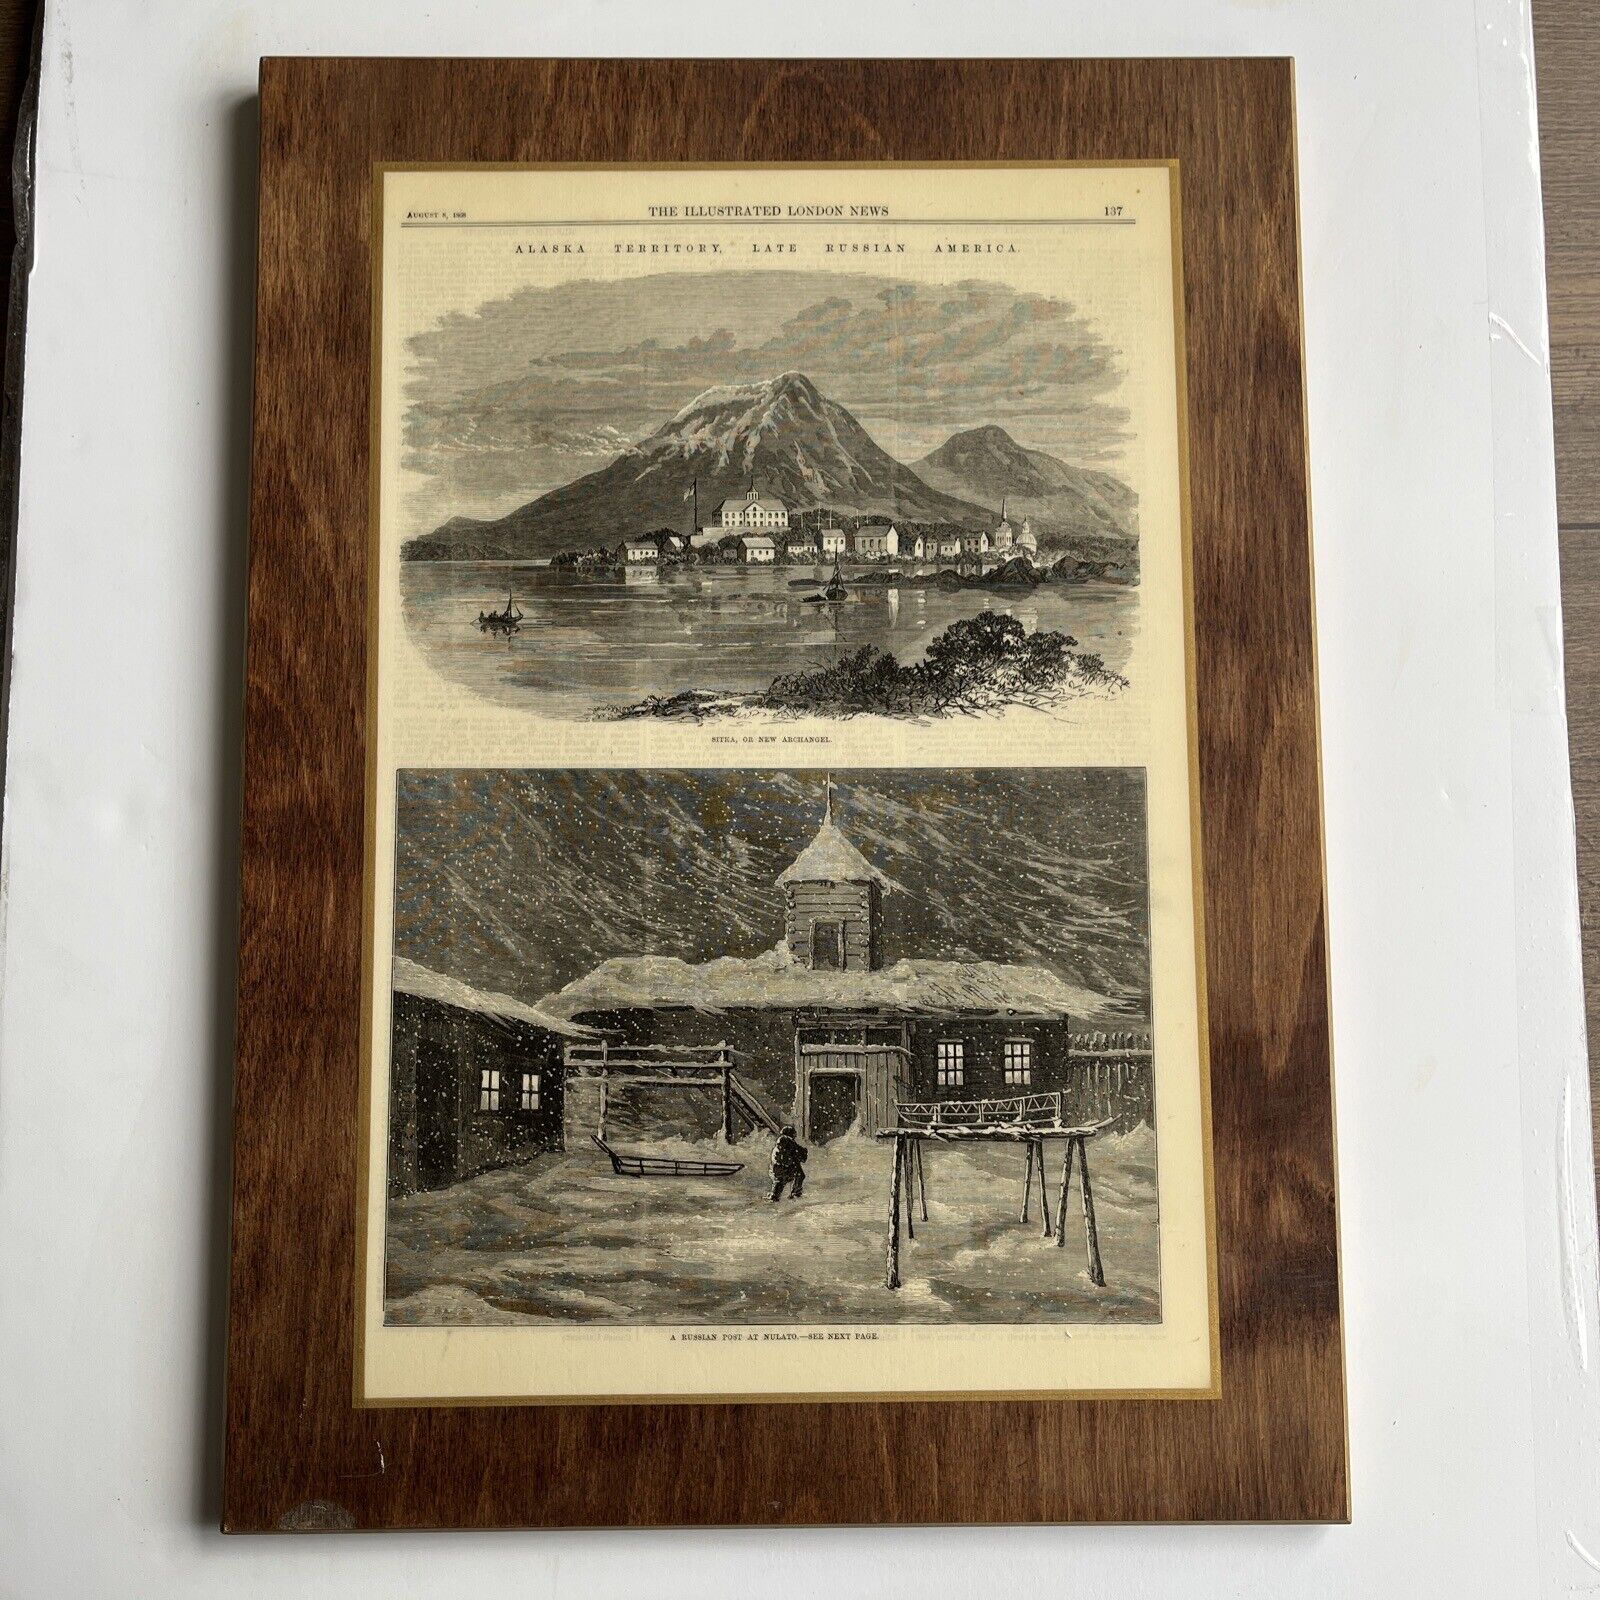 Antique Print Alaska Territory Late Russian America On Perma Plaque Image 1868